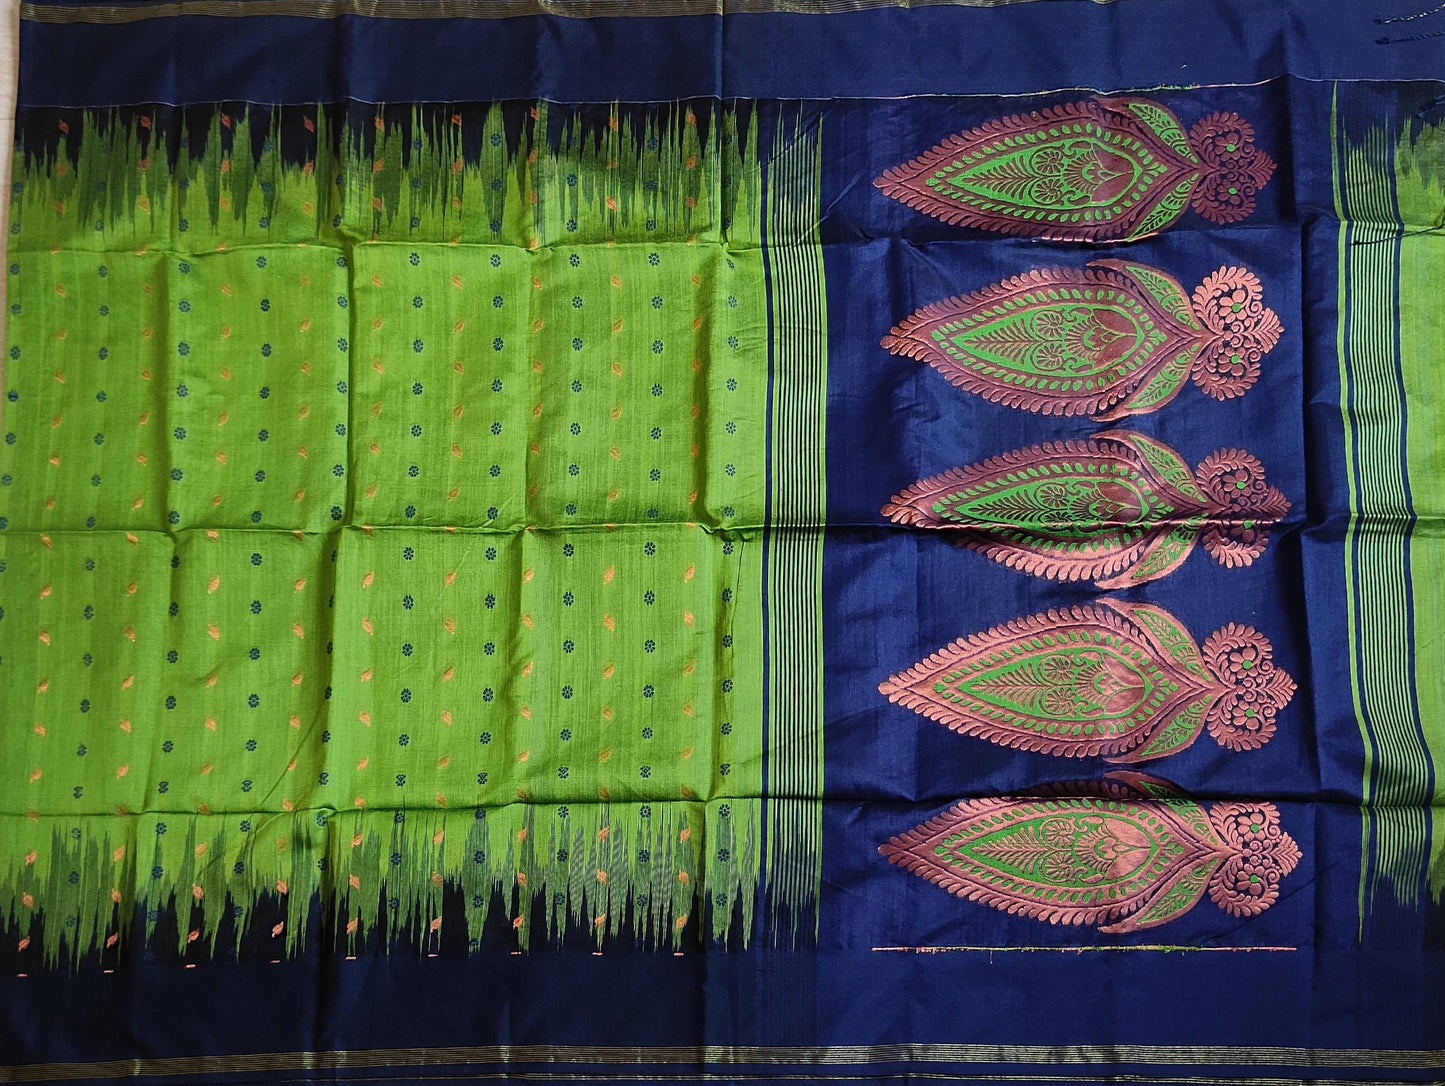 Pradip Fabrics Woven Green and Blue color Soft Handloom Saree